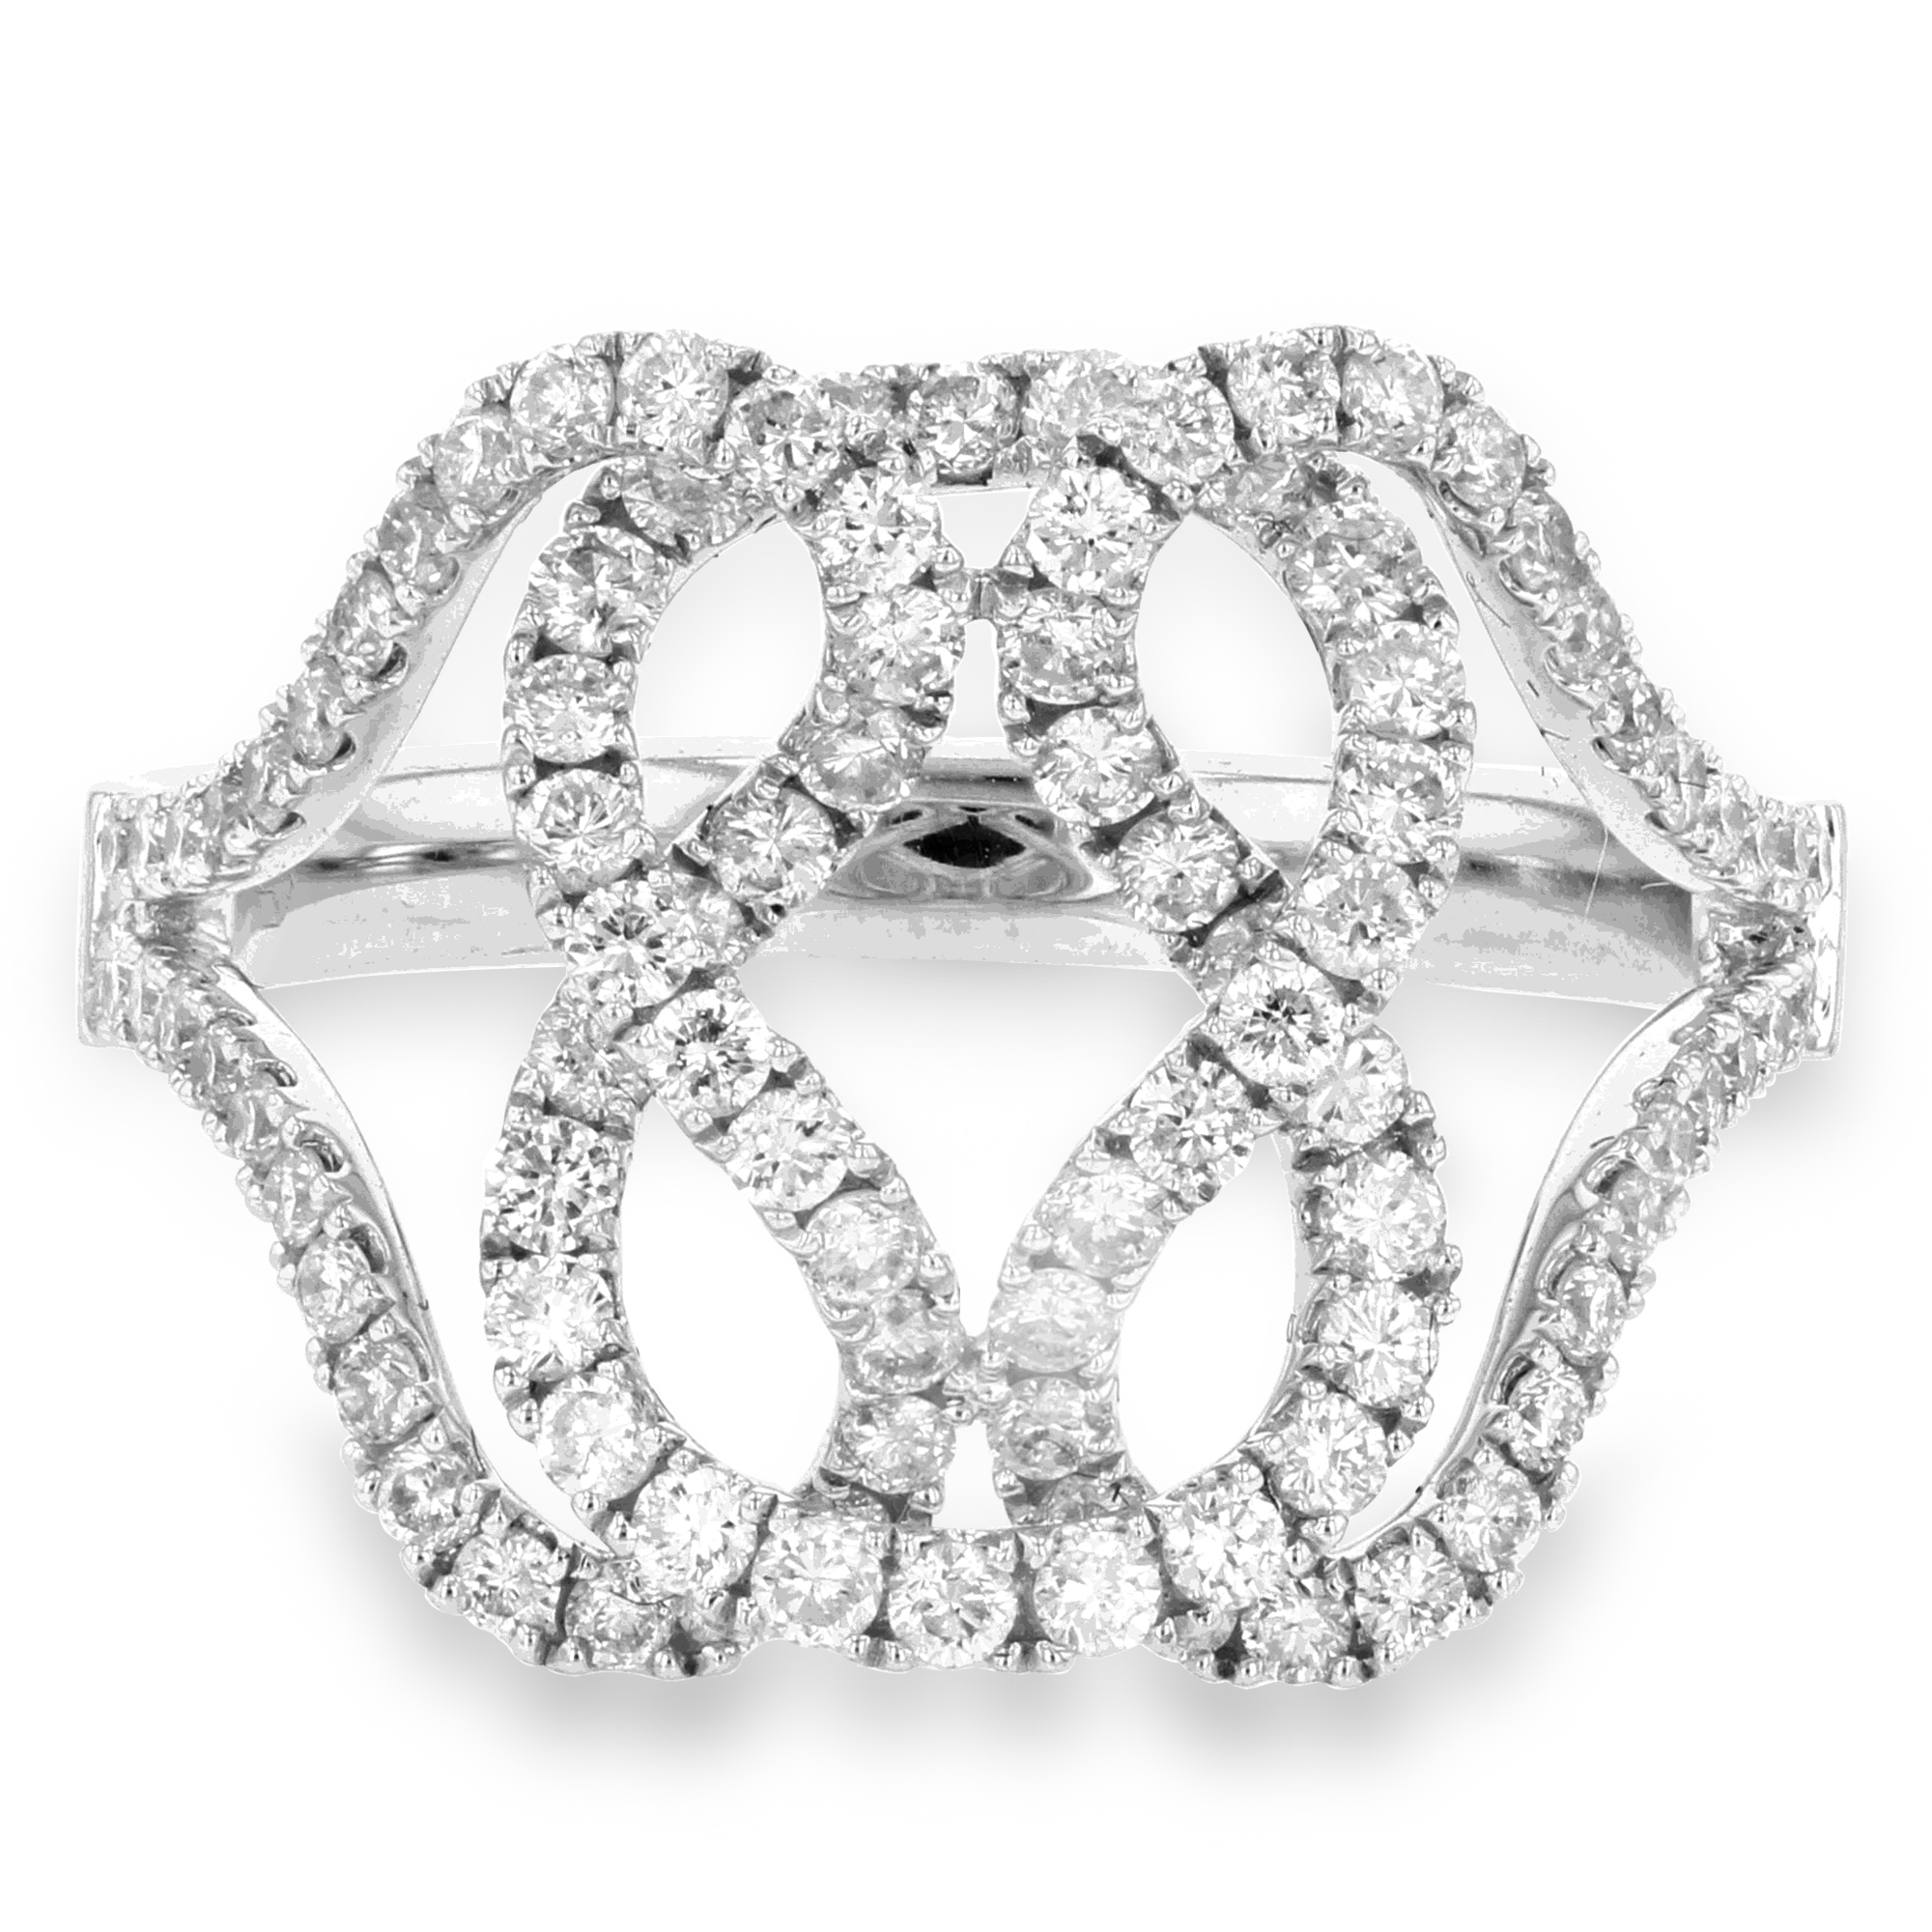 View 1.06ctw Diamond Fashion Ring in 18k White Gold